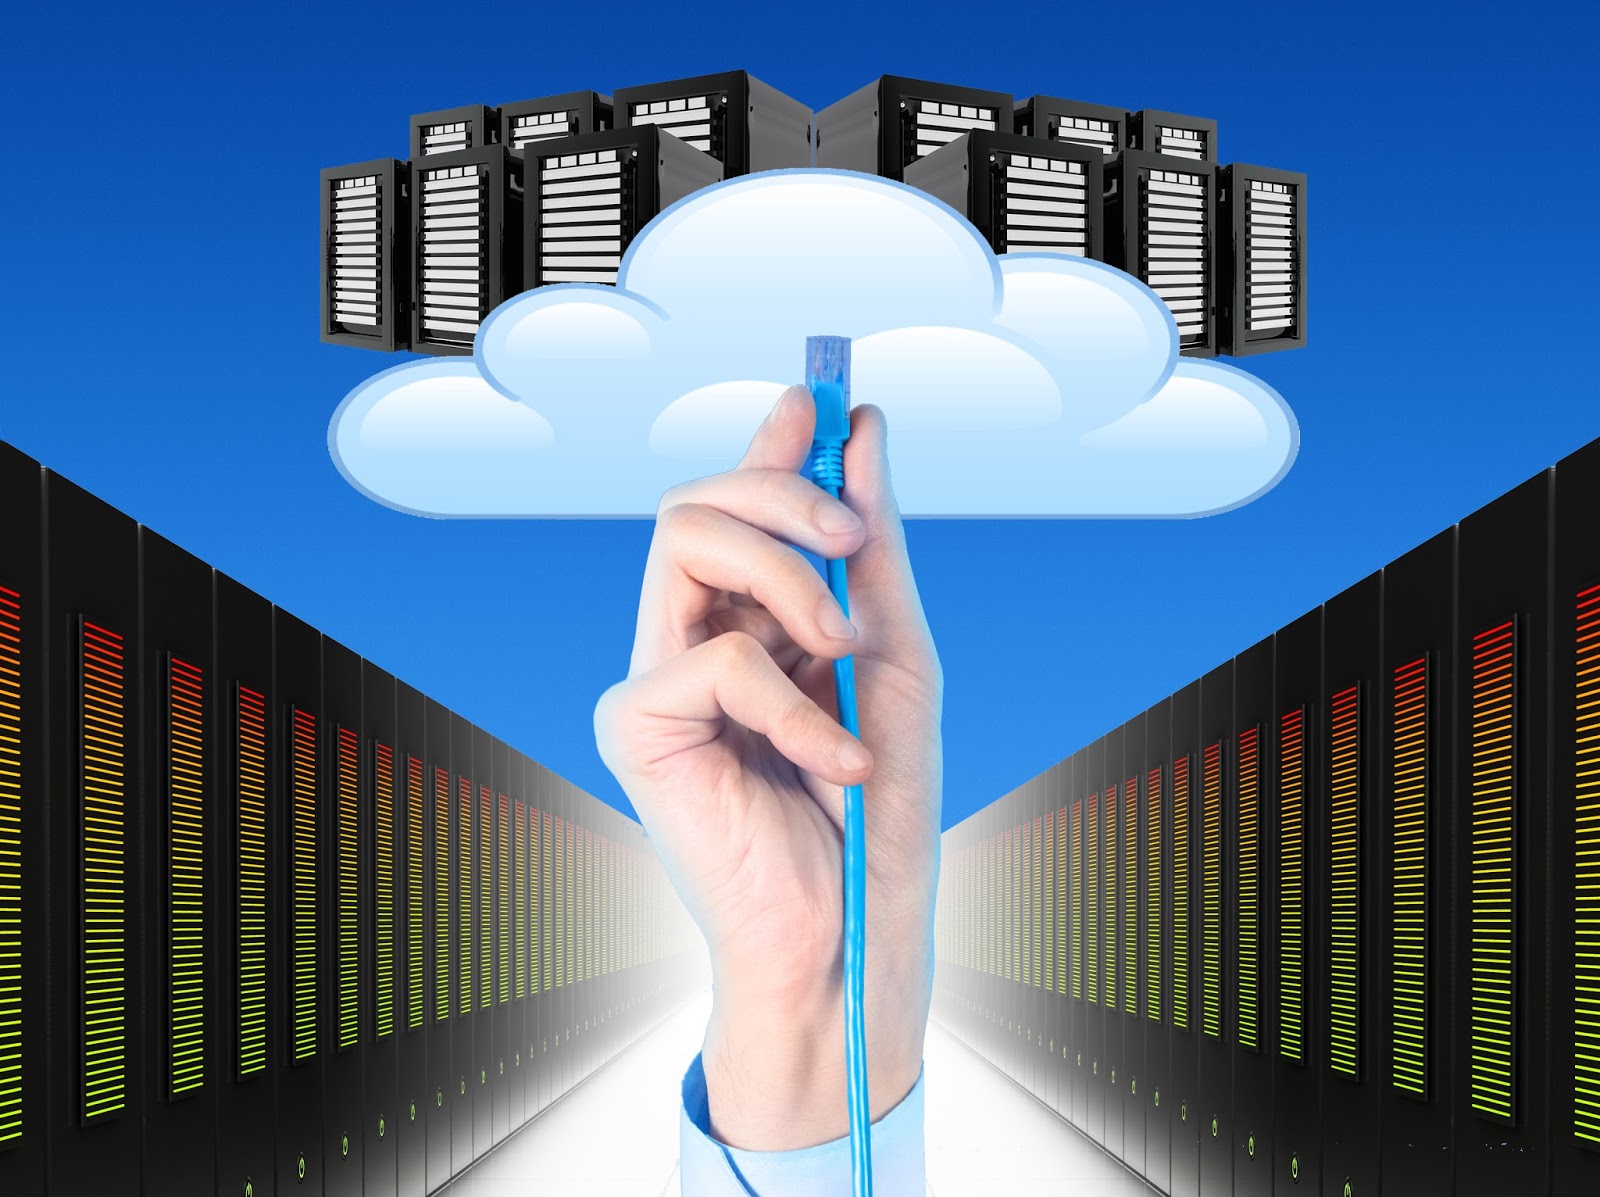 Cloud Hosting Providers